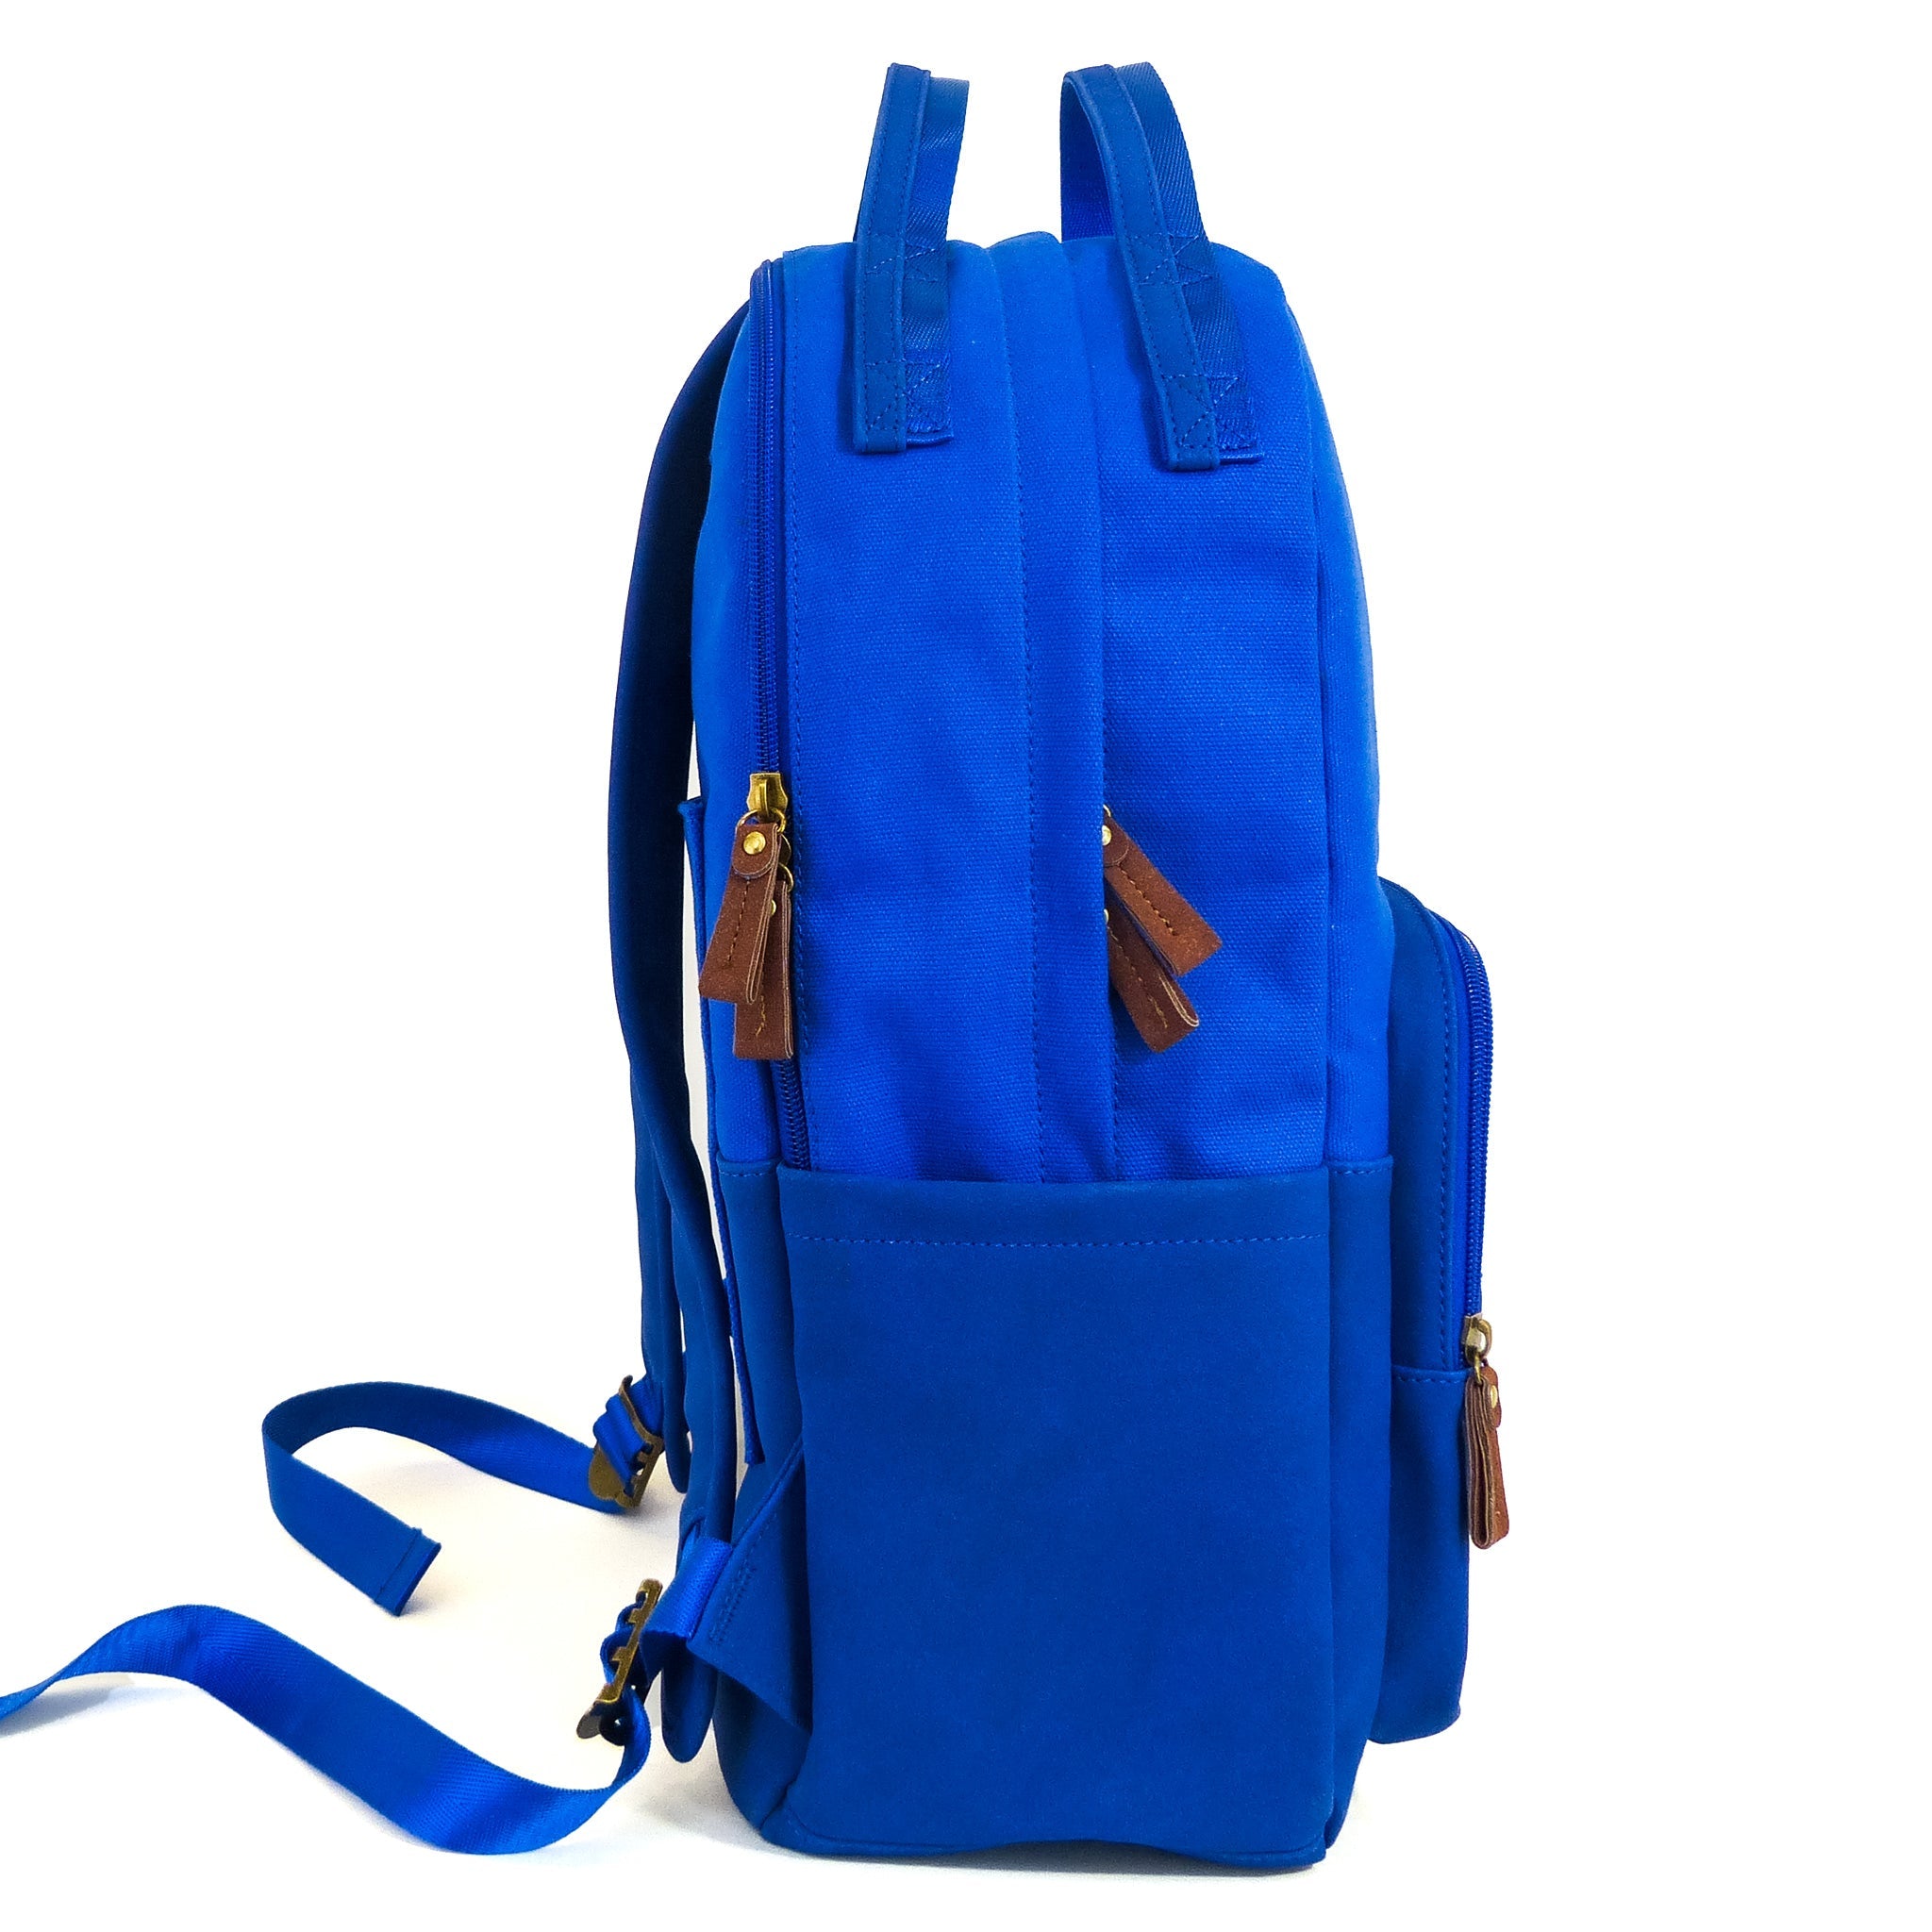 Good To Go Backpack - Eternal Optimist Cobalt Blue by FourFour Co